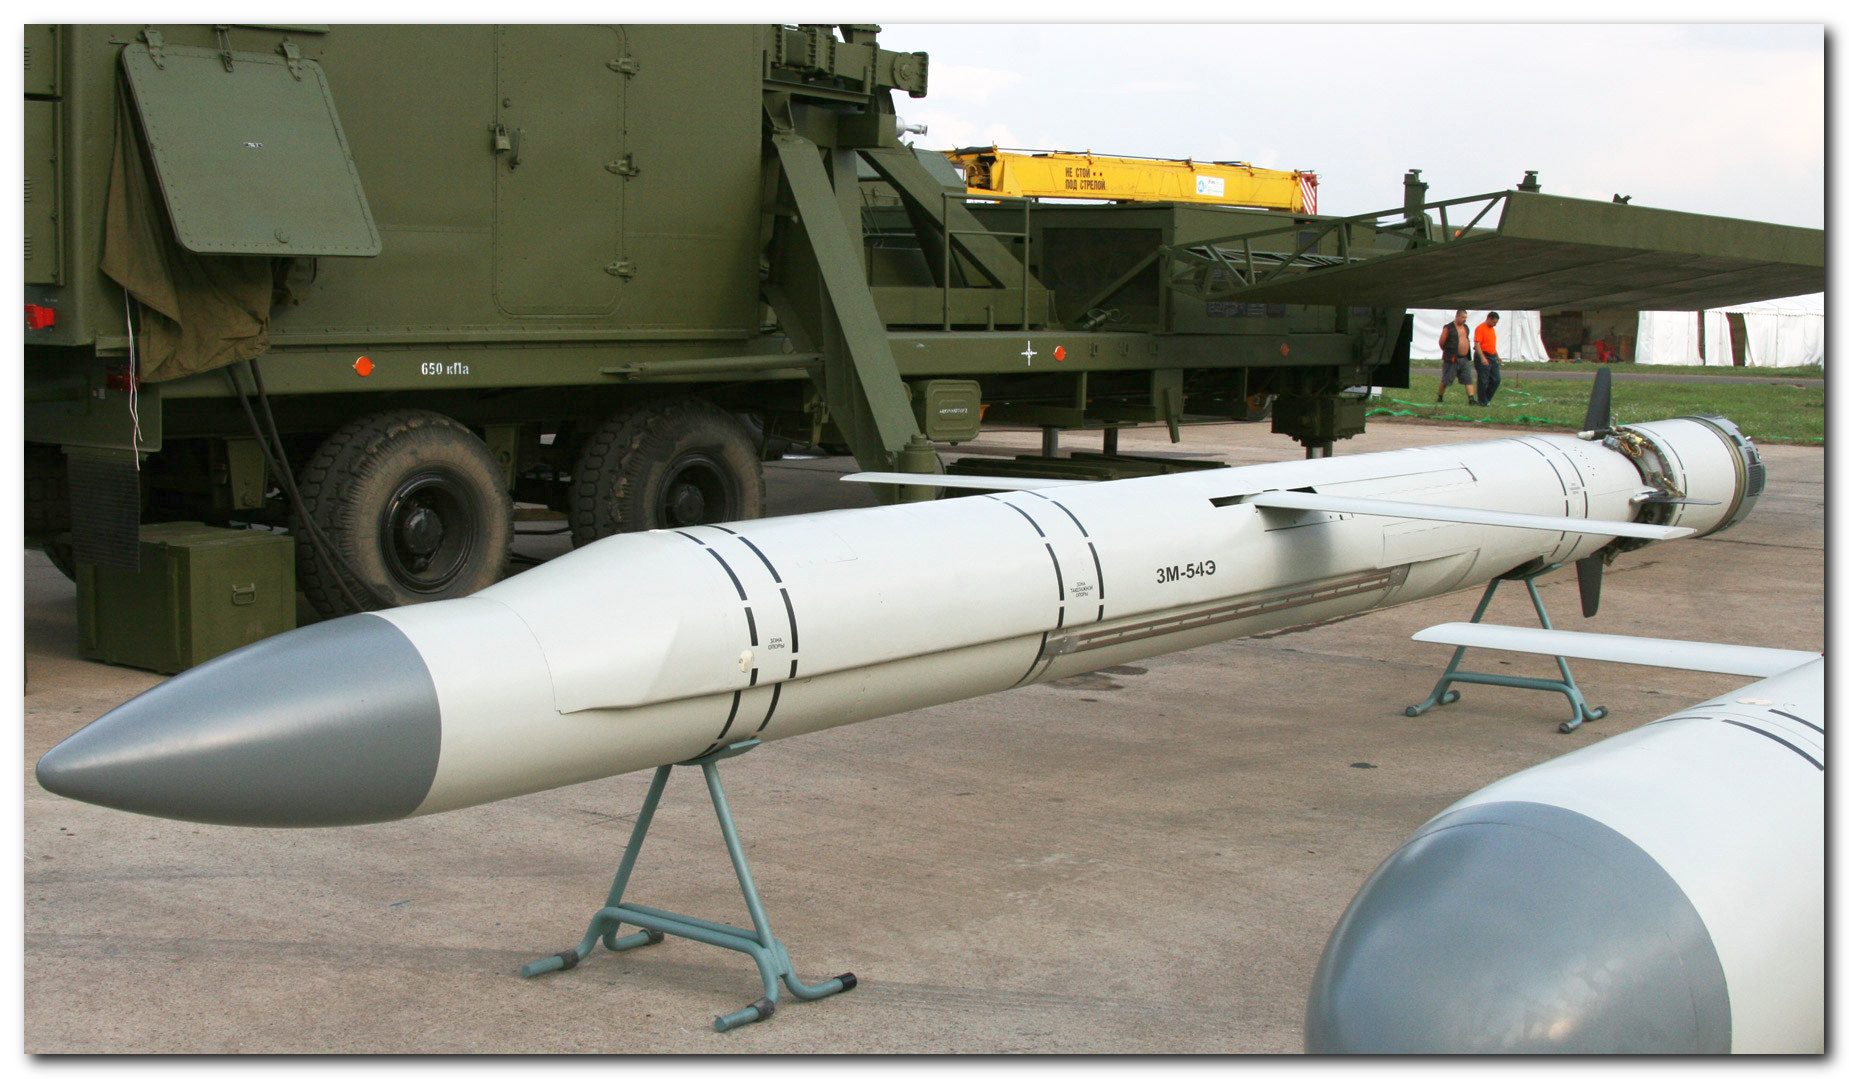 Х 69 крылатая ракета википедия. Ракета Калибр 3м-54э. 3м-54 Калибр. 3м-14 Калибр. П-800 «Оникс» 3м55.